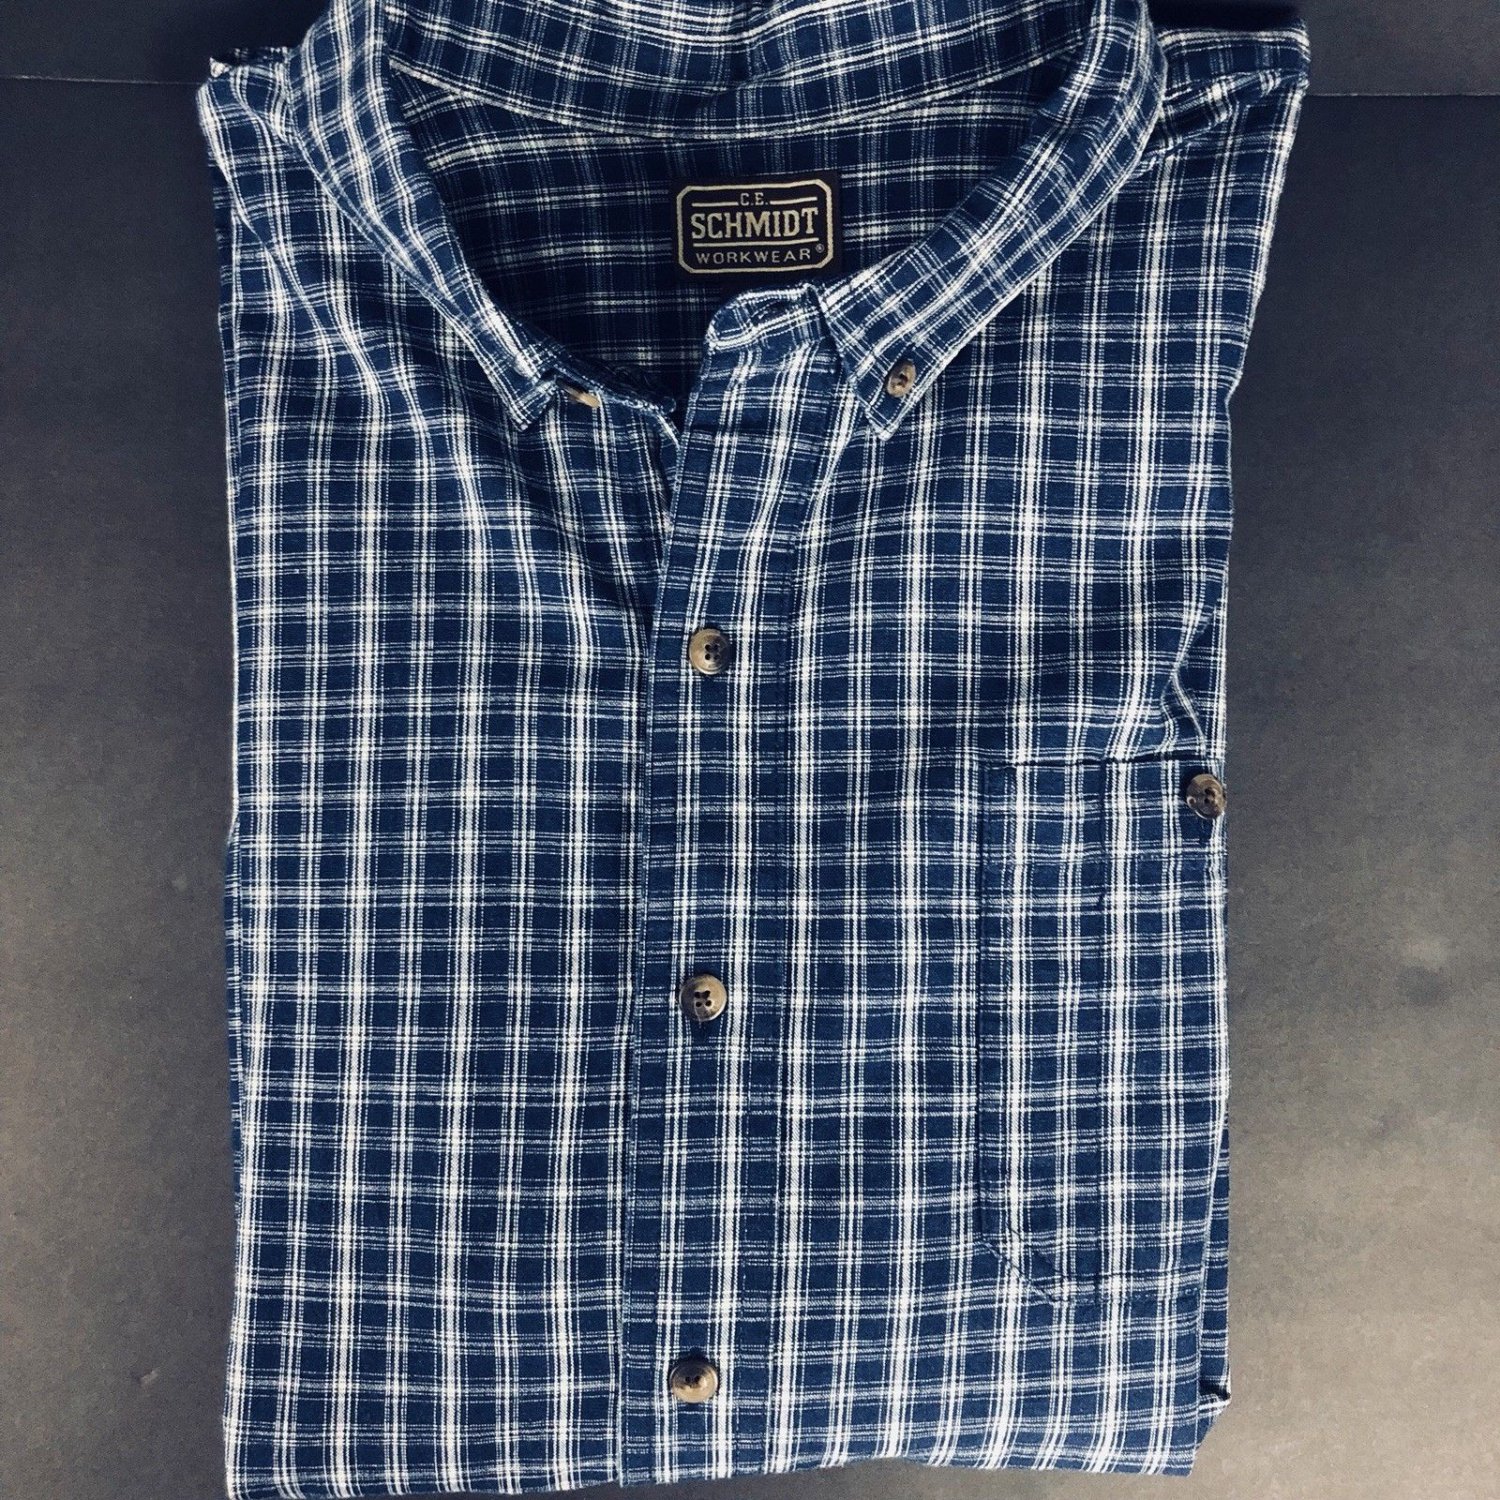 Schmidt Workwear Shirt X-Large Men's Short Sleeve Cotton Button Front ...